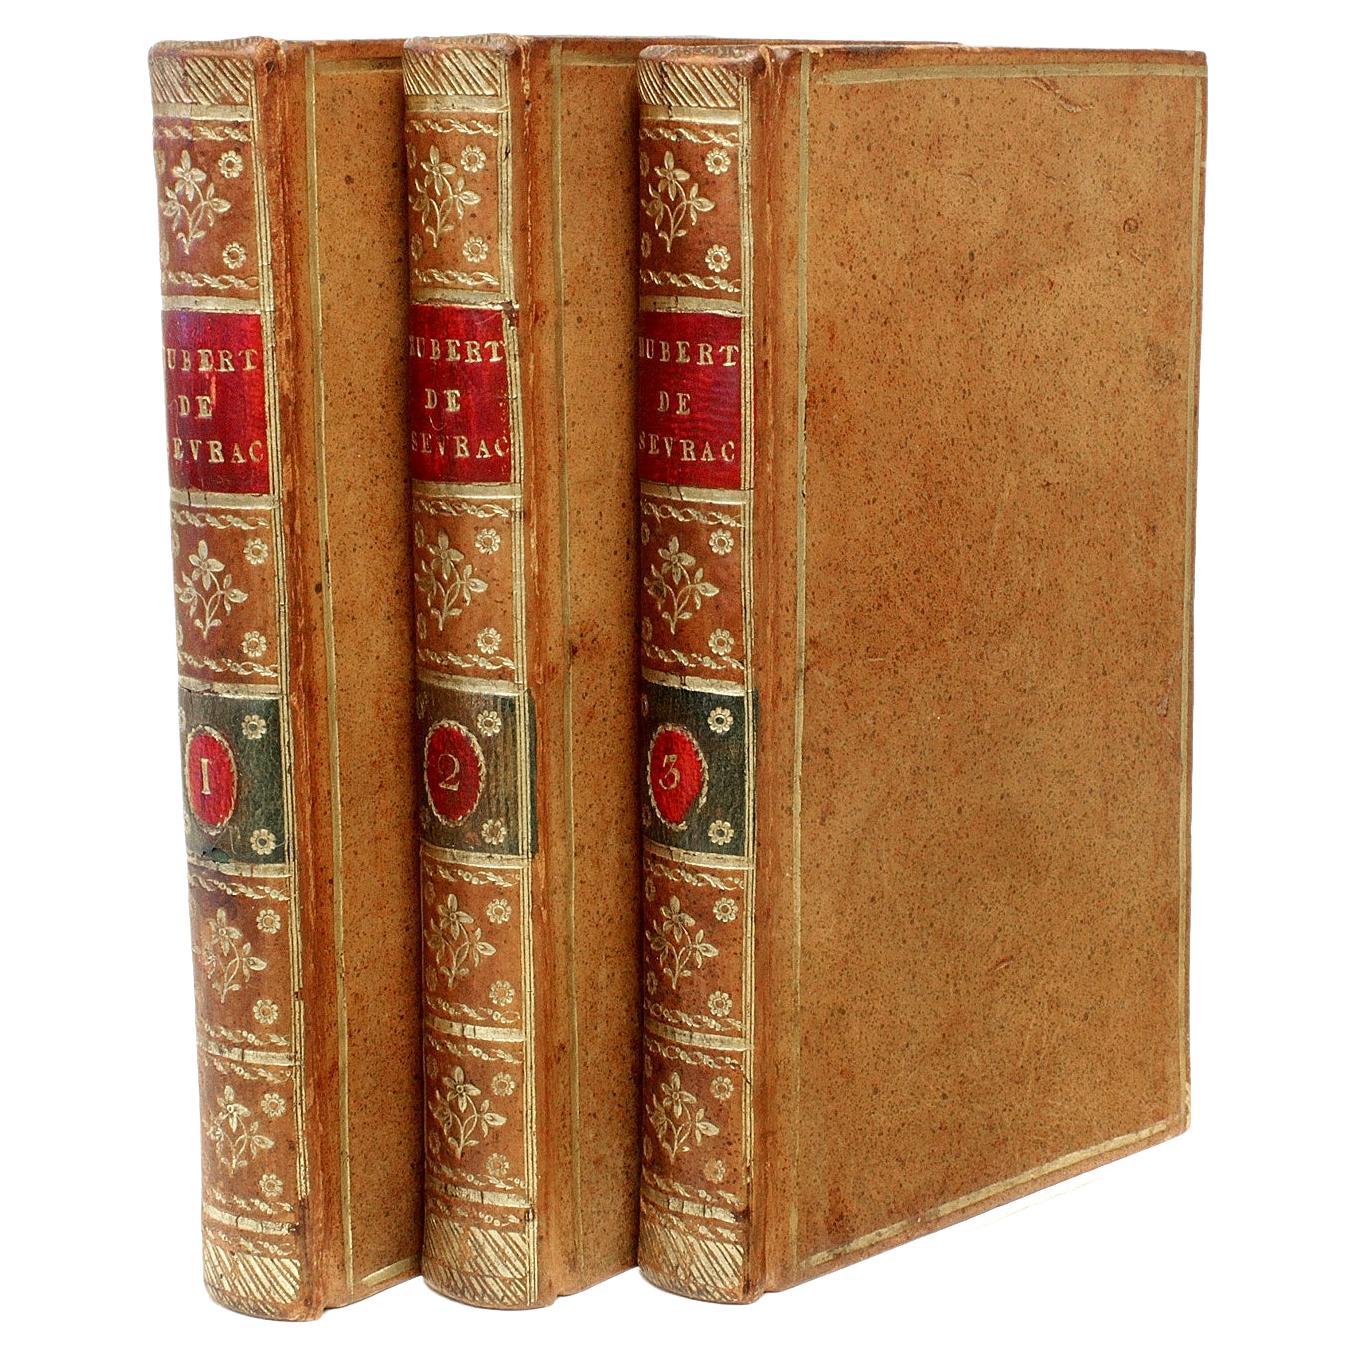 Mary Robinson, Hubert De Sevrac a Romance of the Eighteenth Century, 1st Ed 1796 For Sale